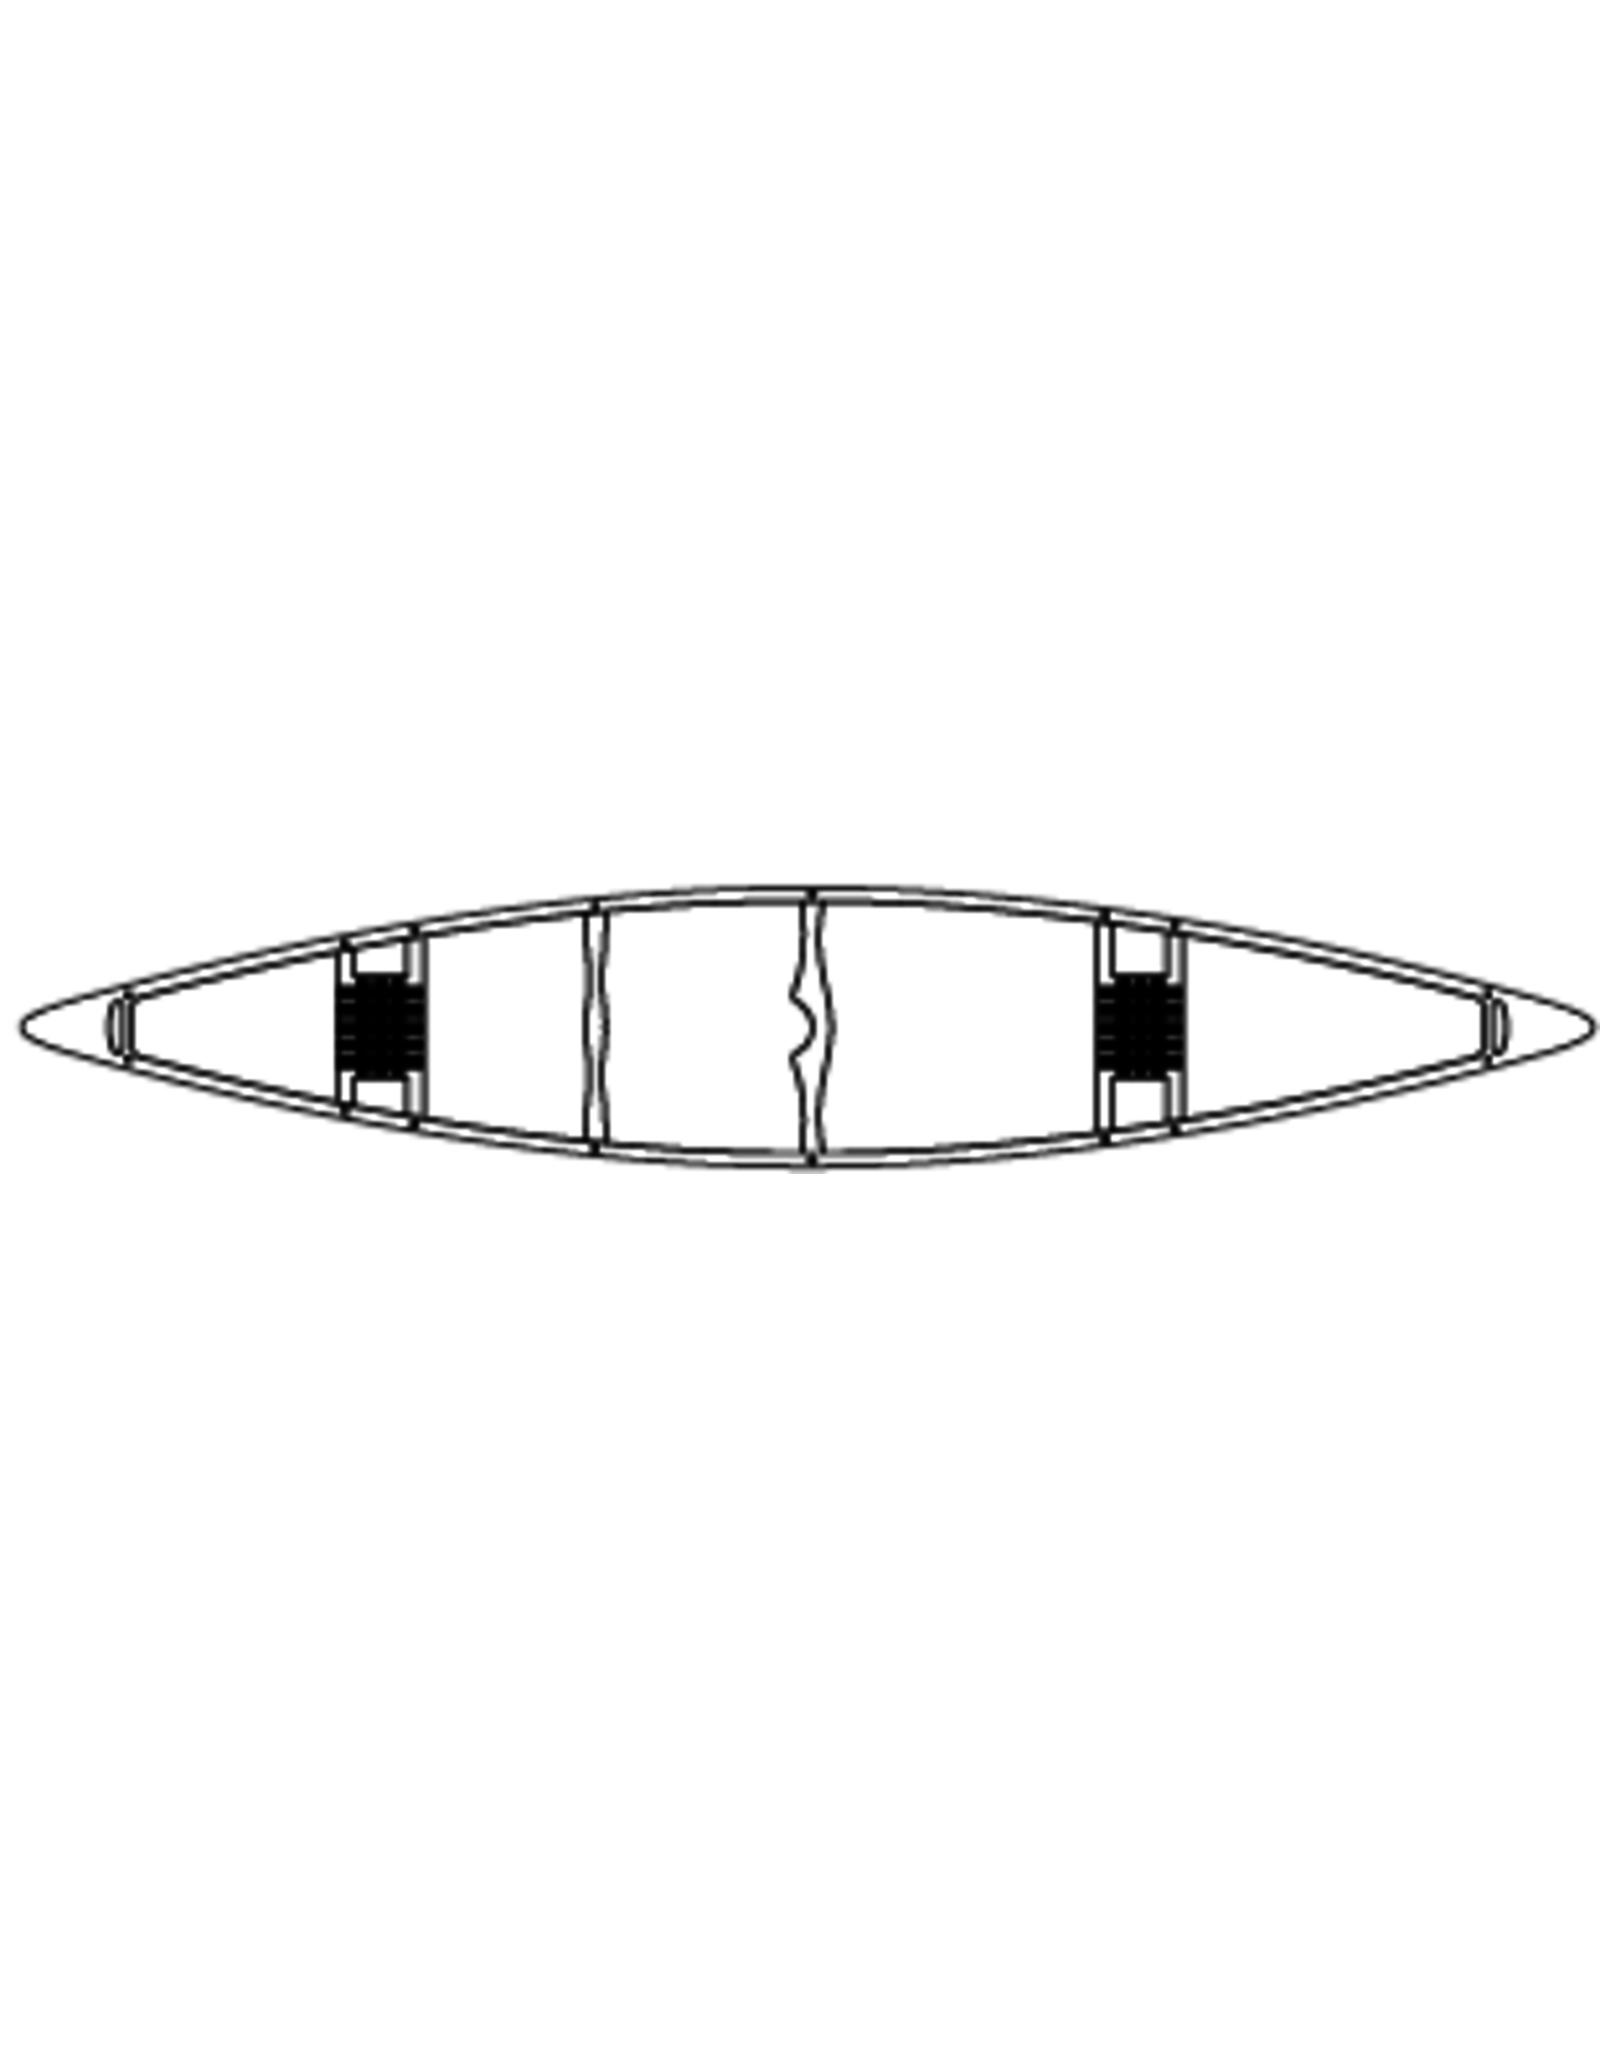 Esquif Esquif T-Formex canoe Prospecteur 17